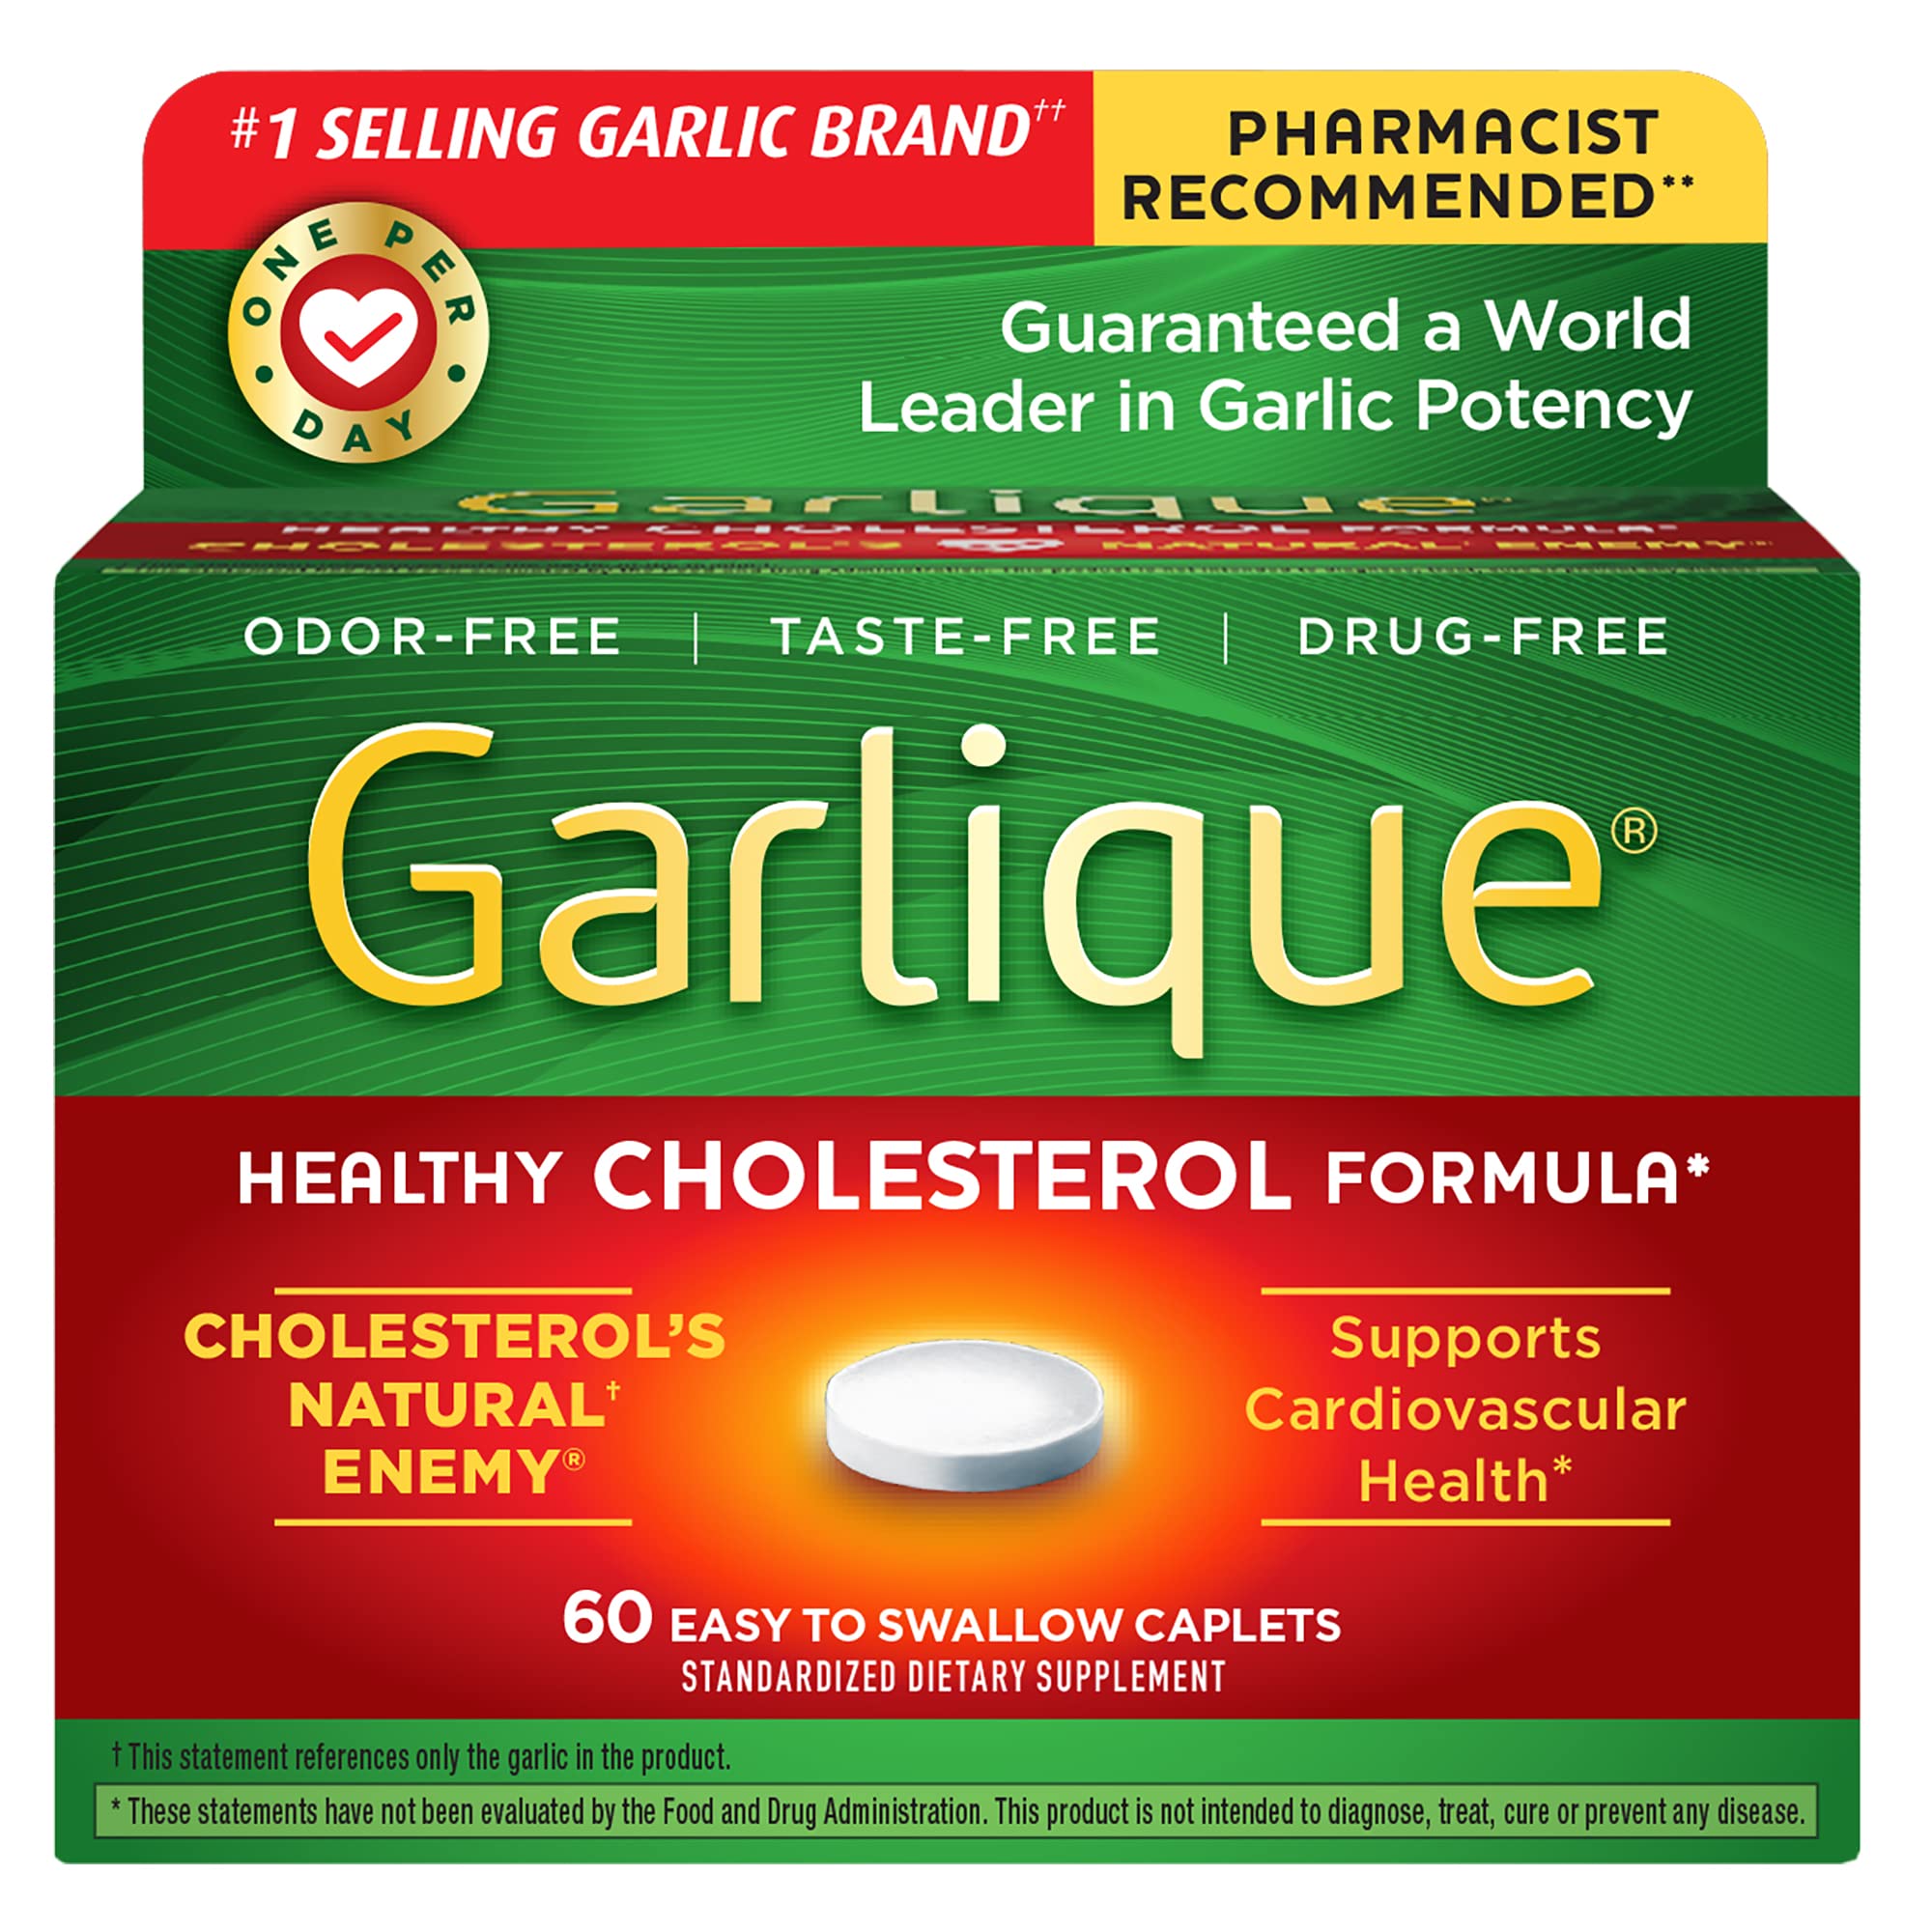 Garlique Garlic Extract Supplement, Healthy Cholesterol Formula, Odorless & Vegan, 60 Caplets